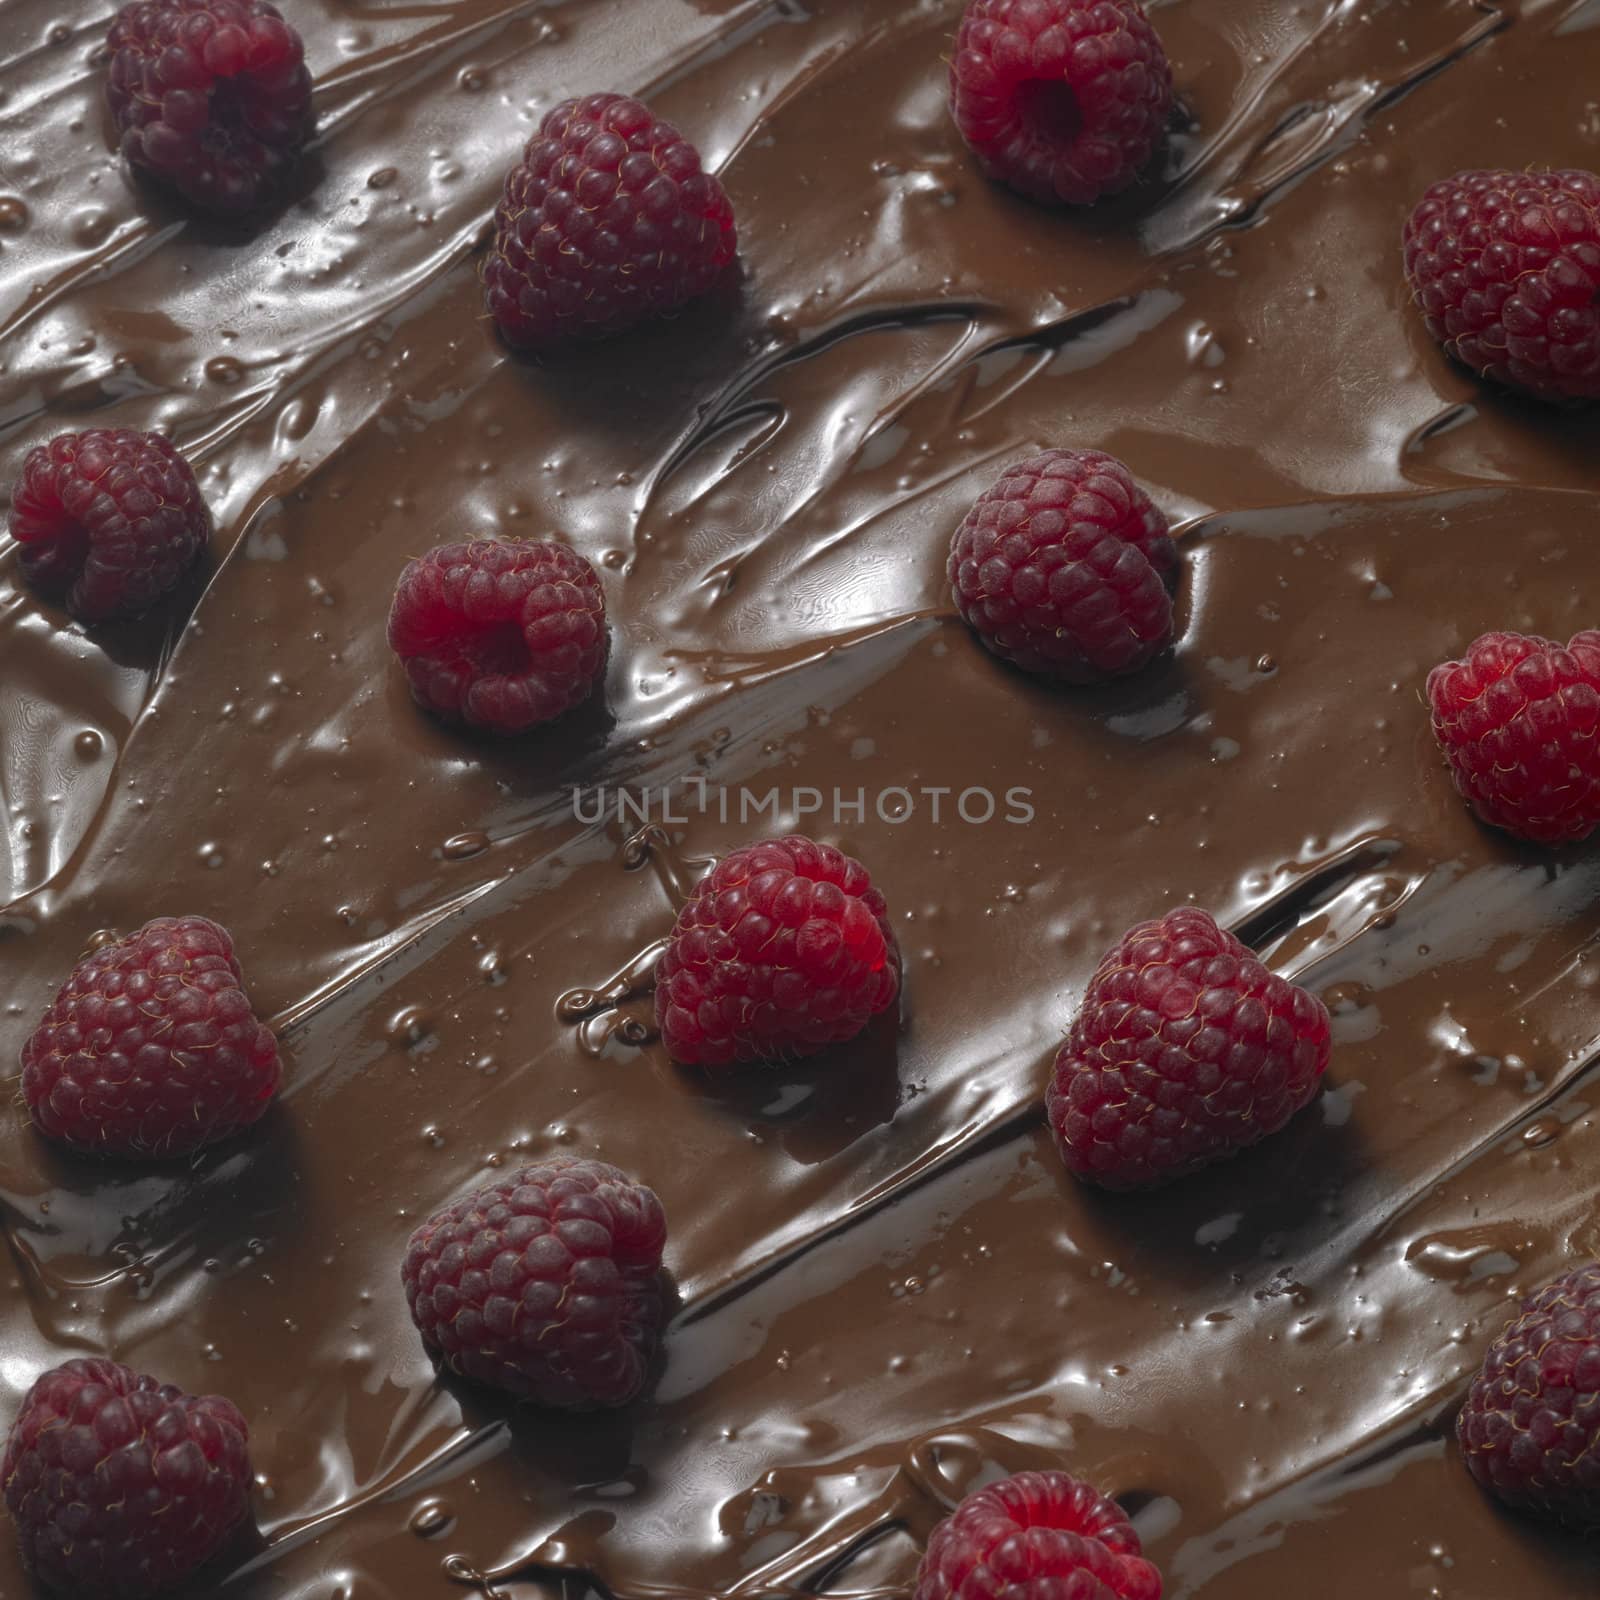 raspberries with chocolate by phbcz